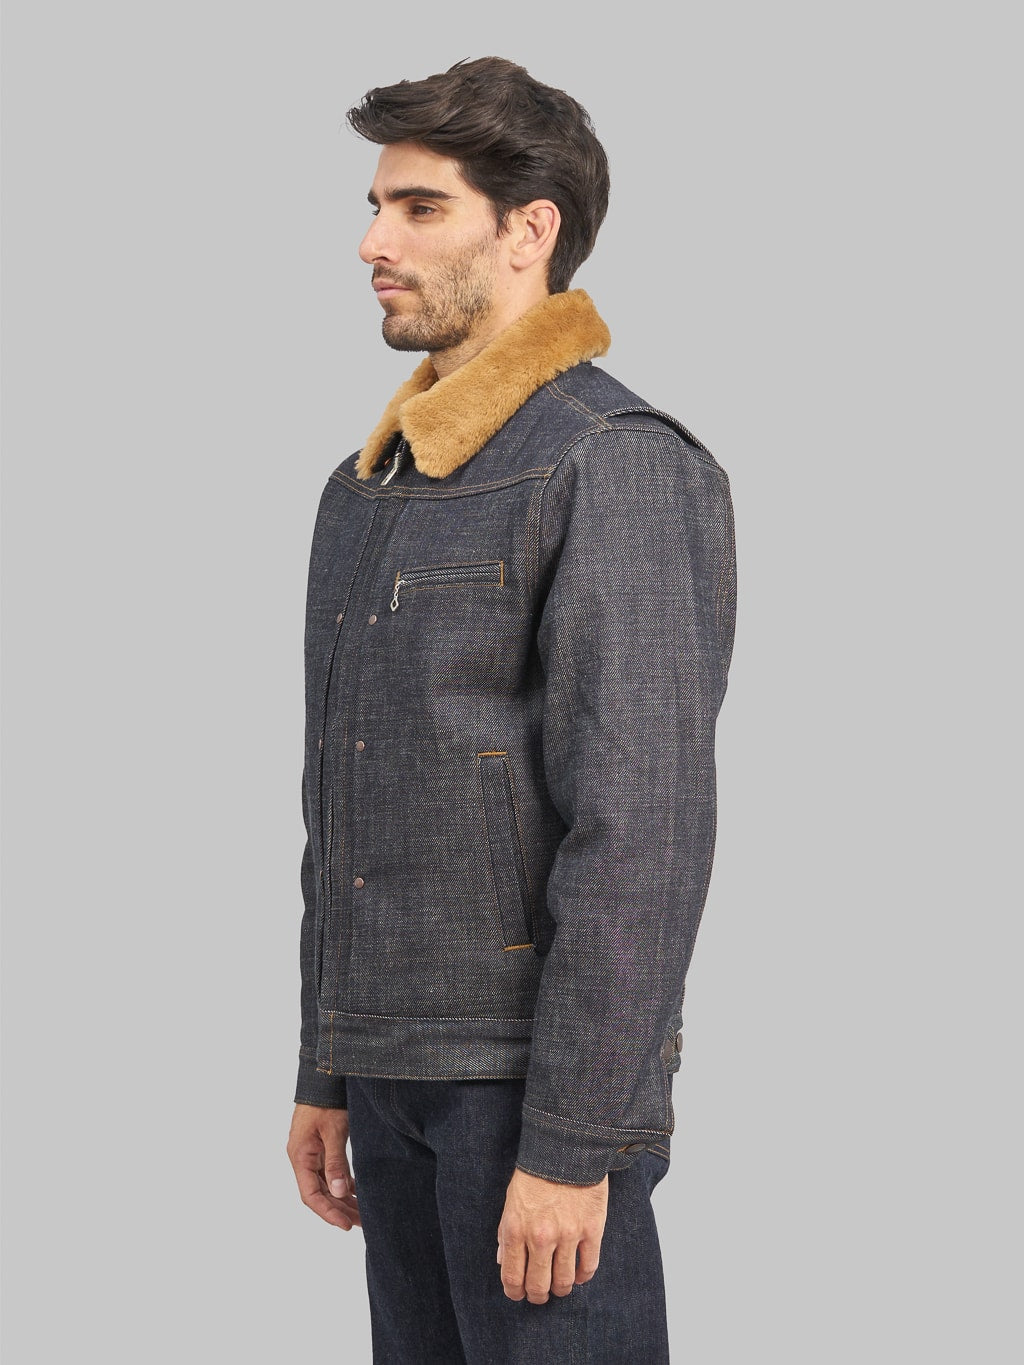 Freenote Cloth Denim Shearling Jacket model side fit